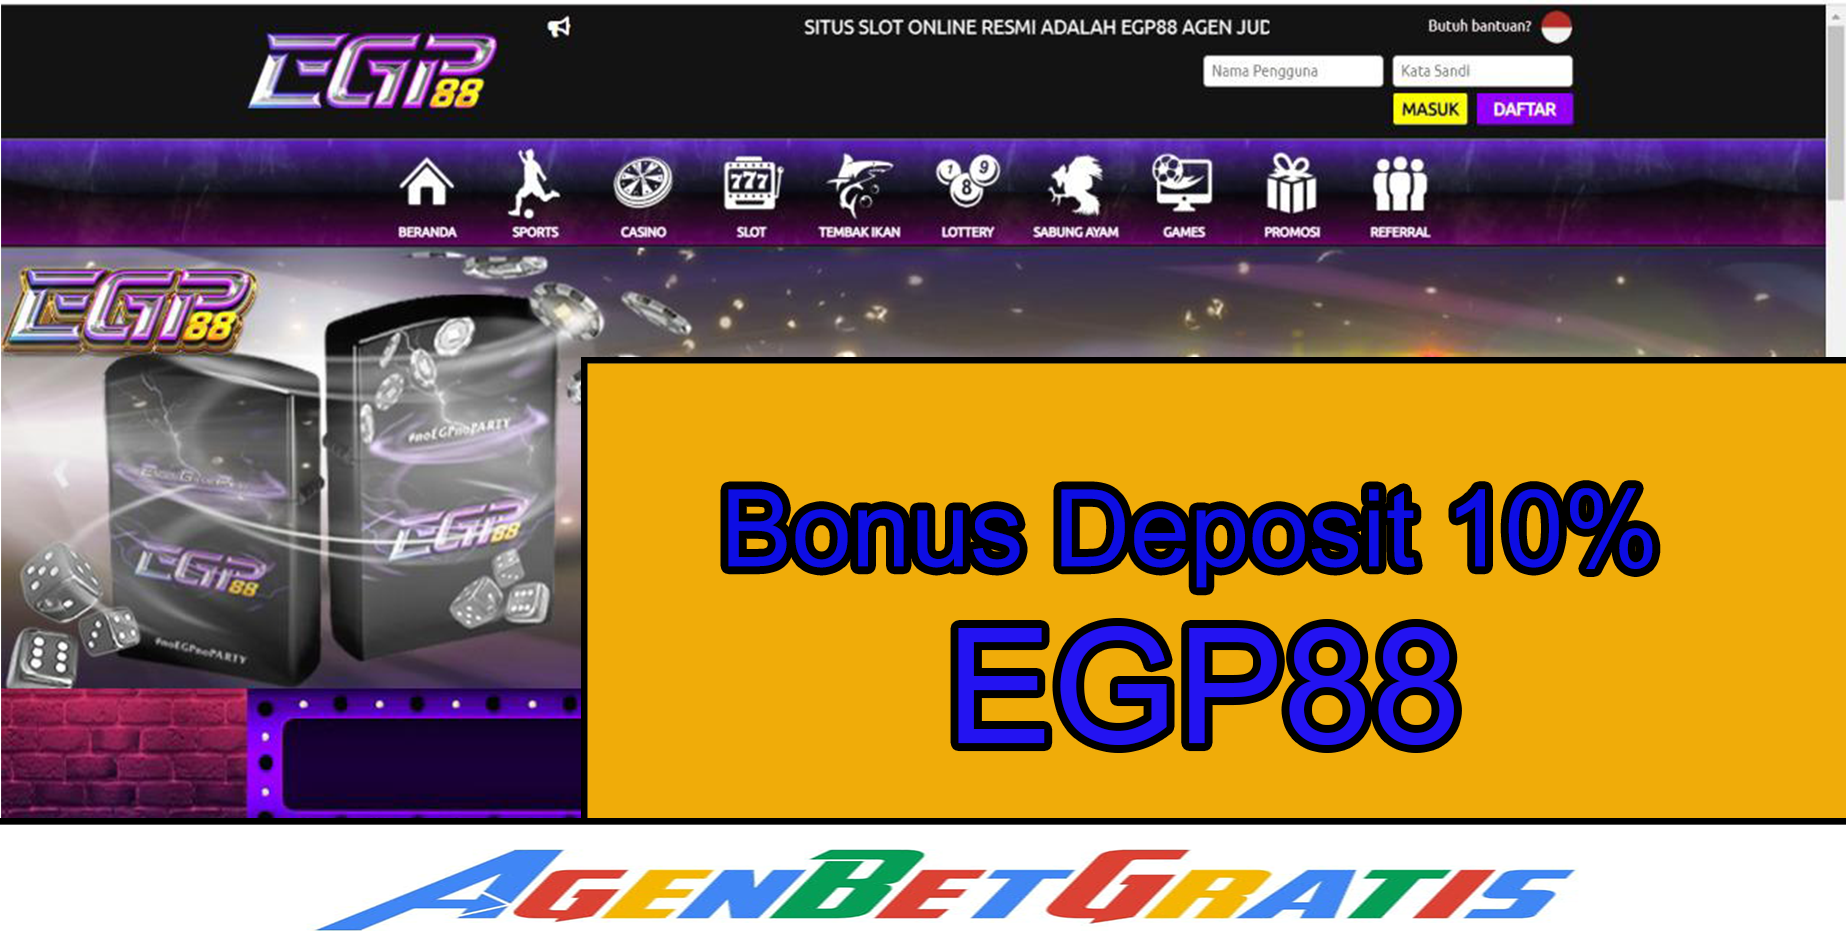 EGP88 - Welcome Bonus 20%